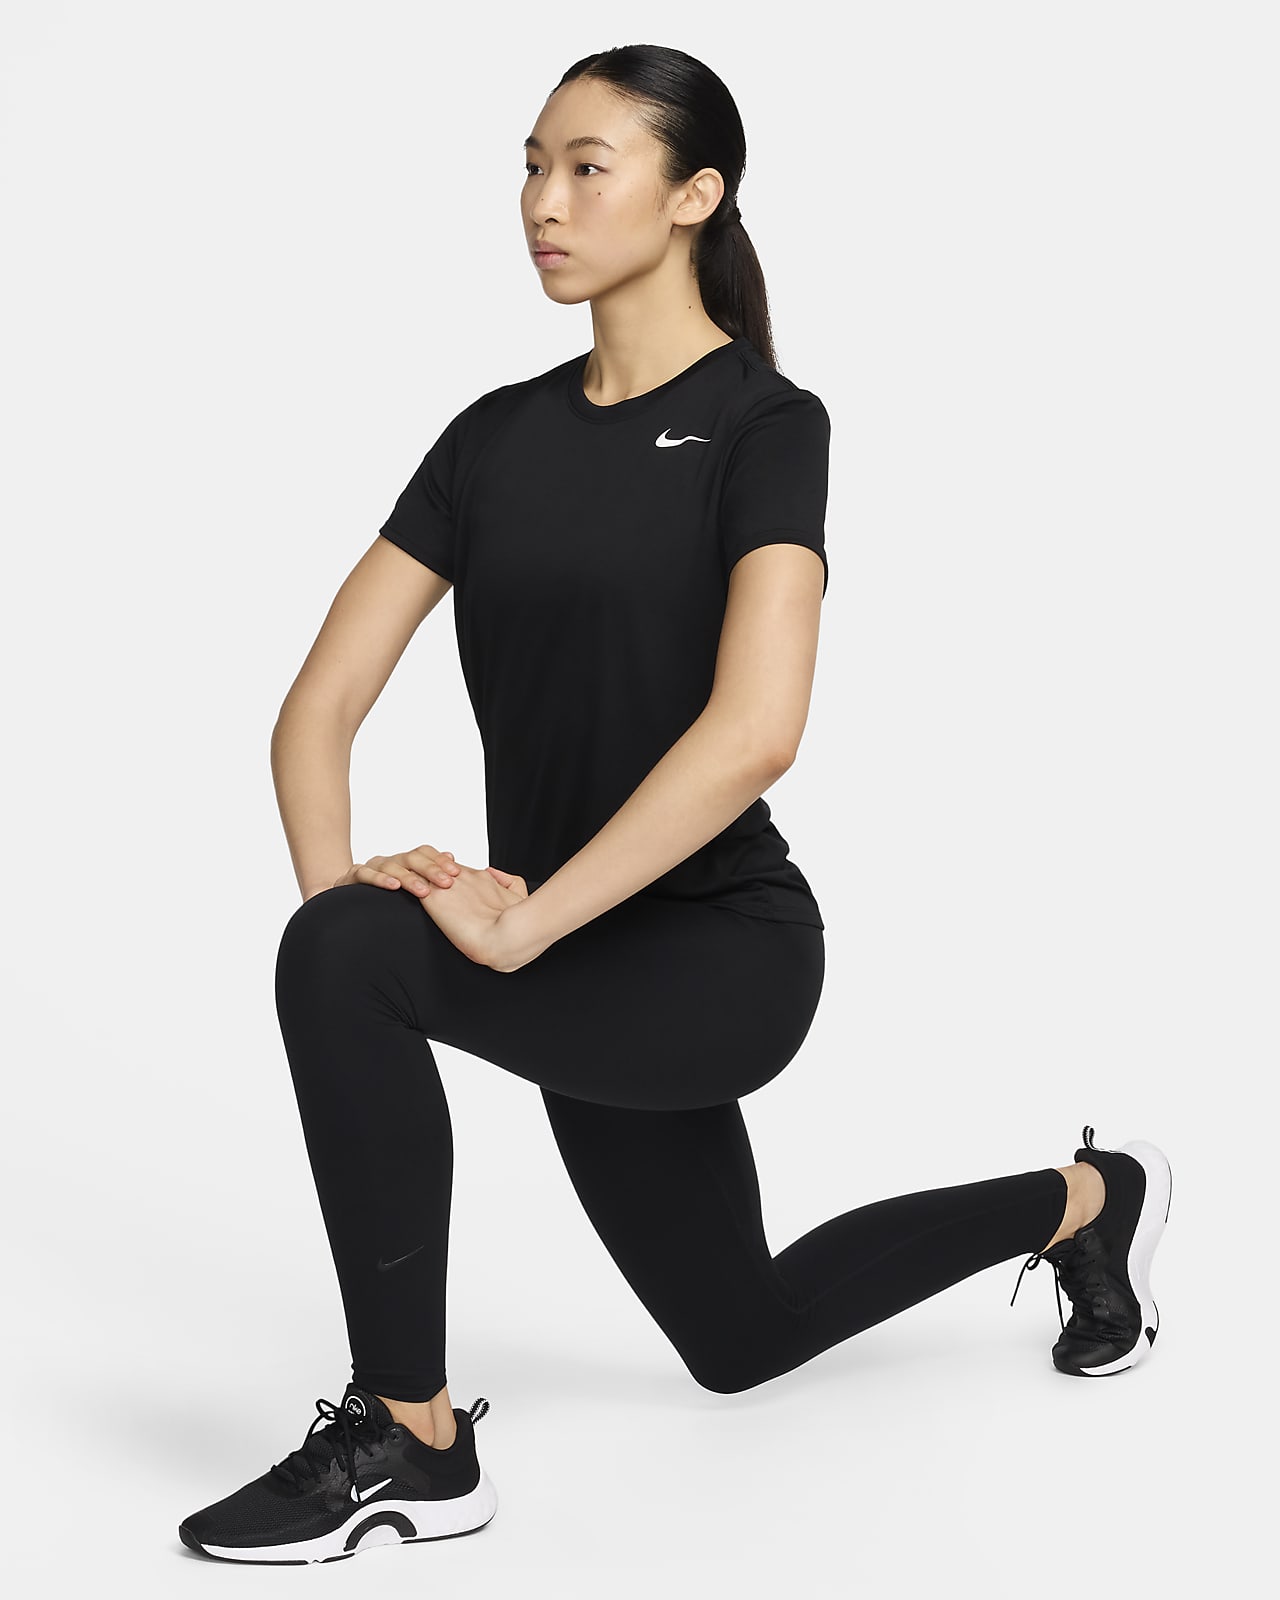 Nike Women Activewear Top Medium Black T-Shirt Logo Graphic Dri Fit Tee